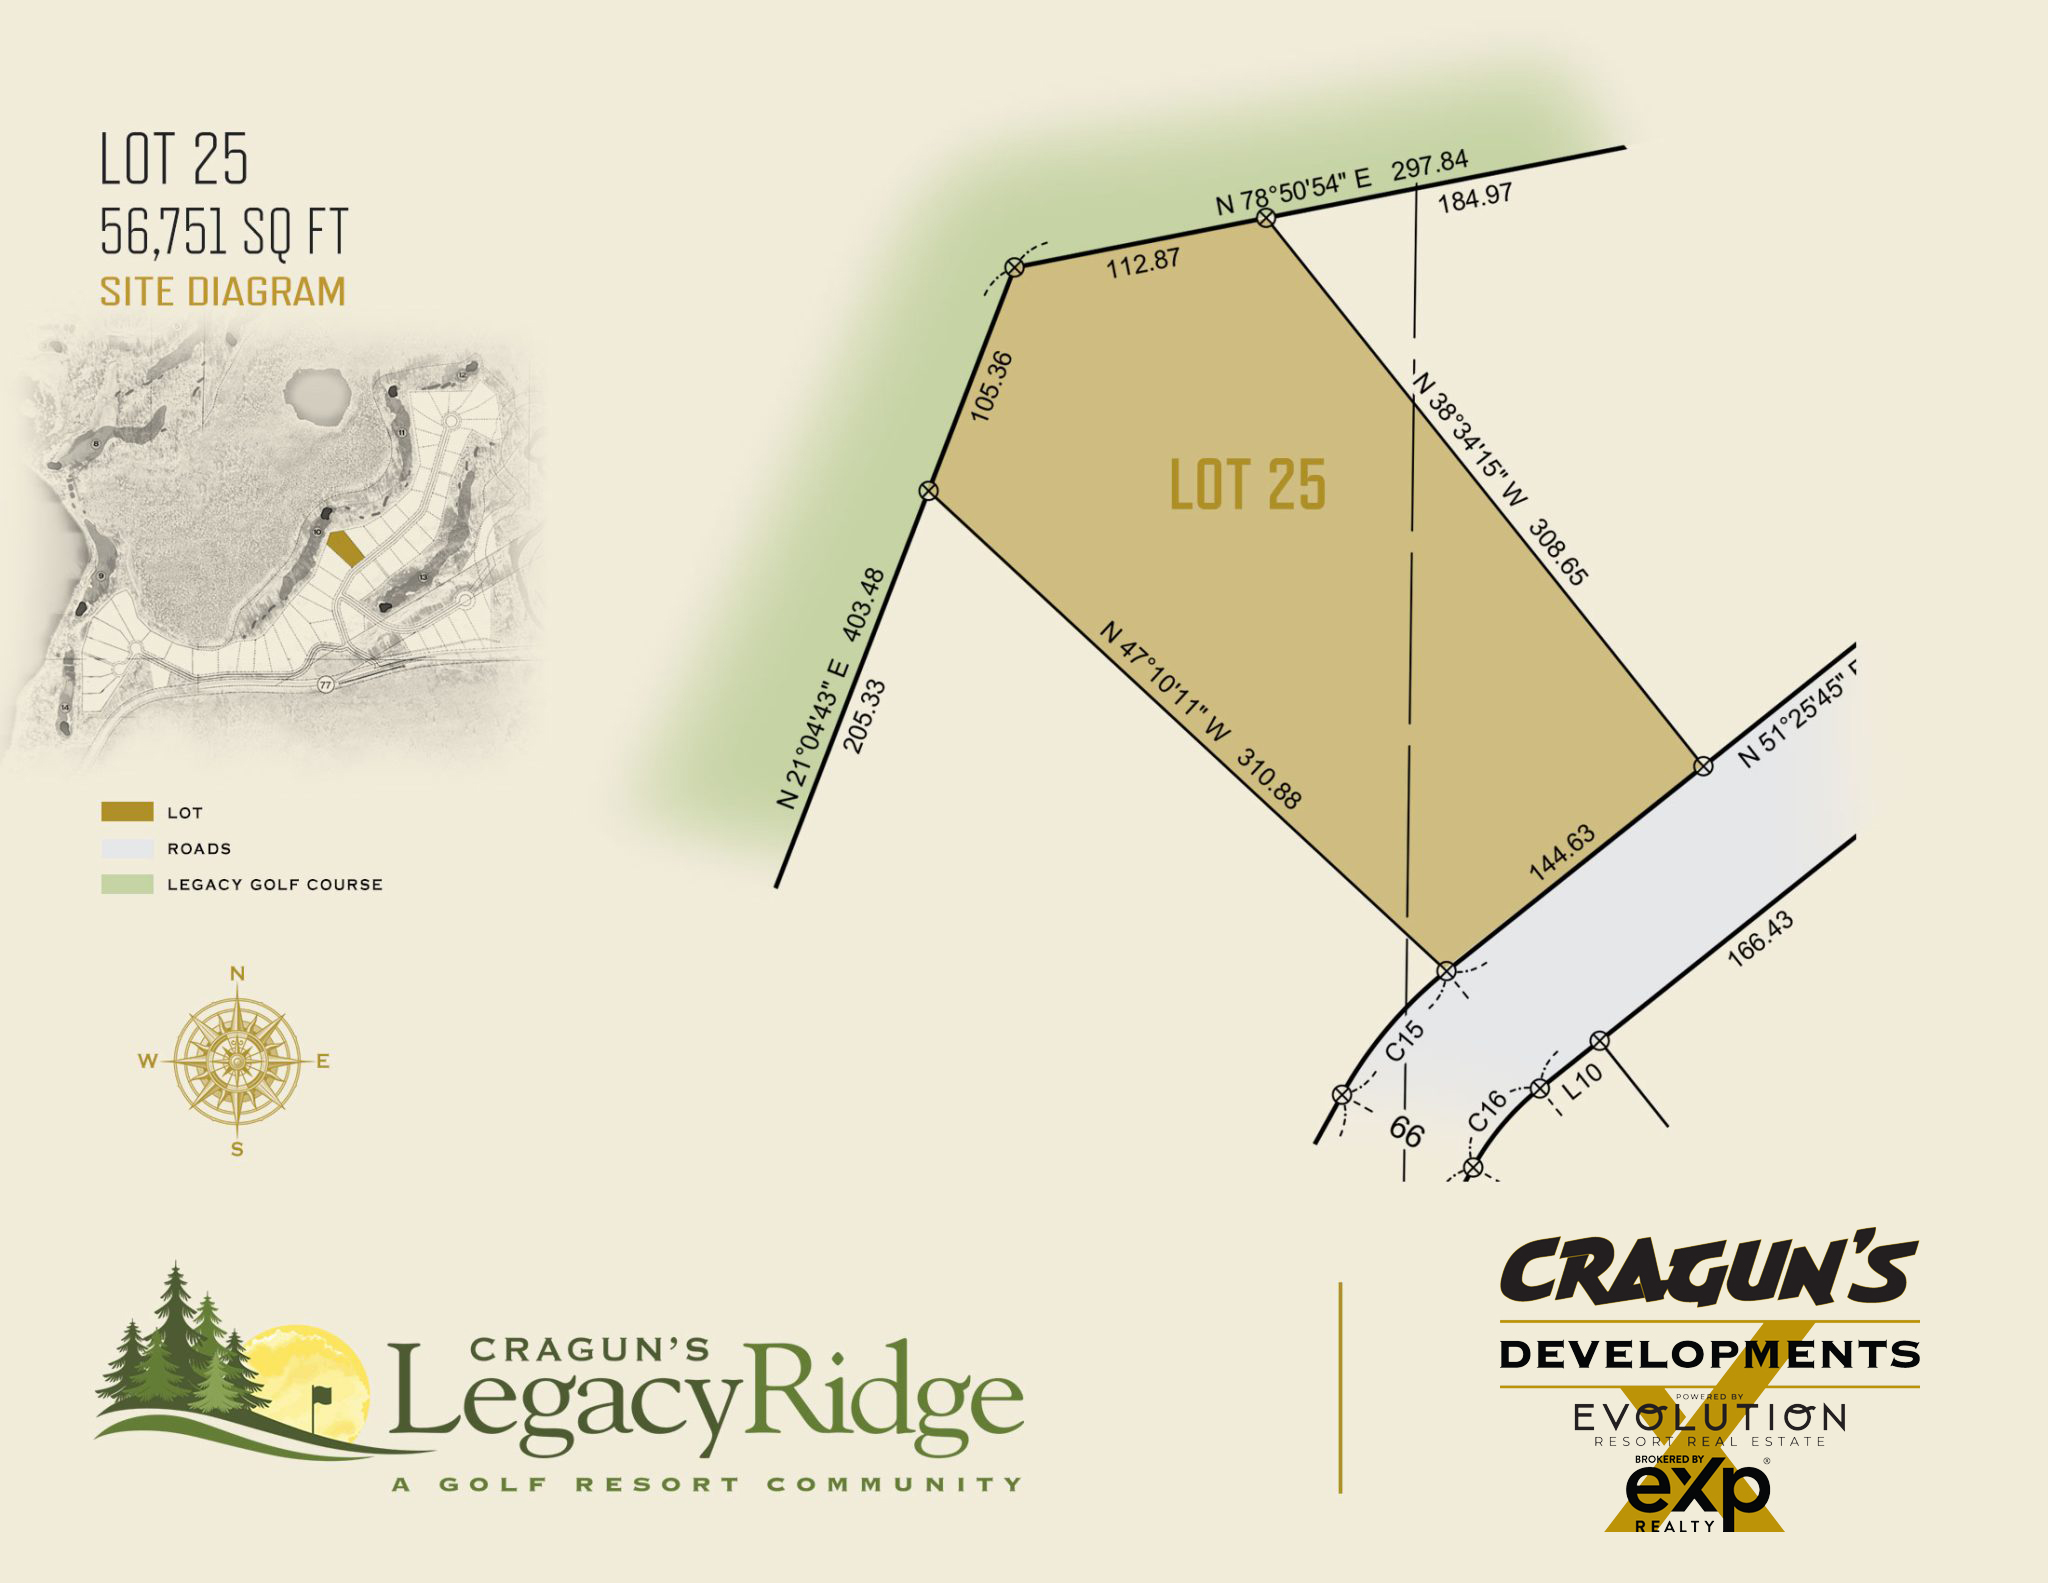 Legacy Ridge Lot 24 at Cragun's Developments in Brainerd, MN